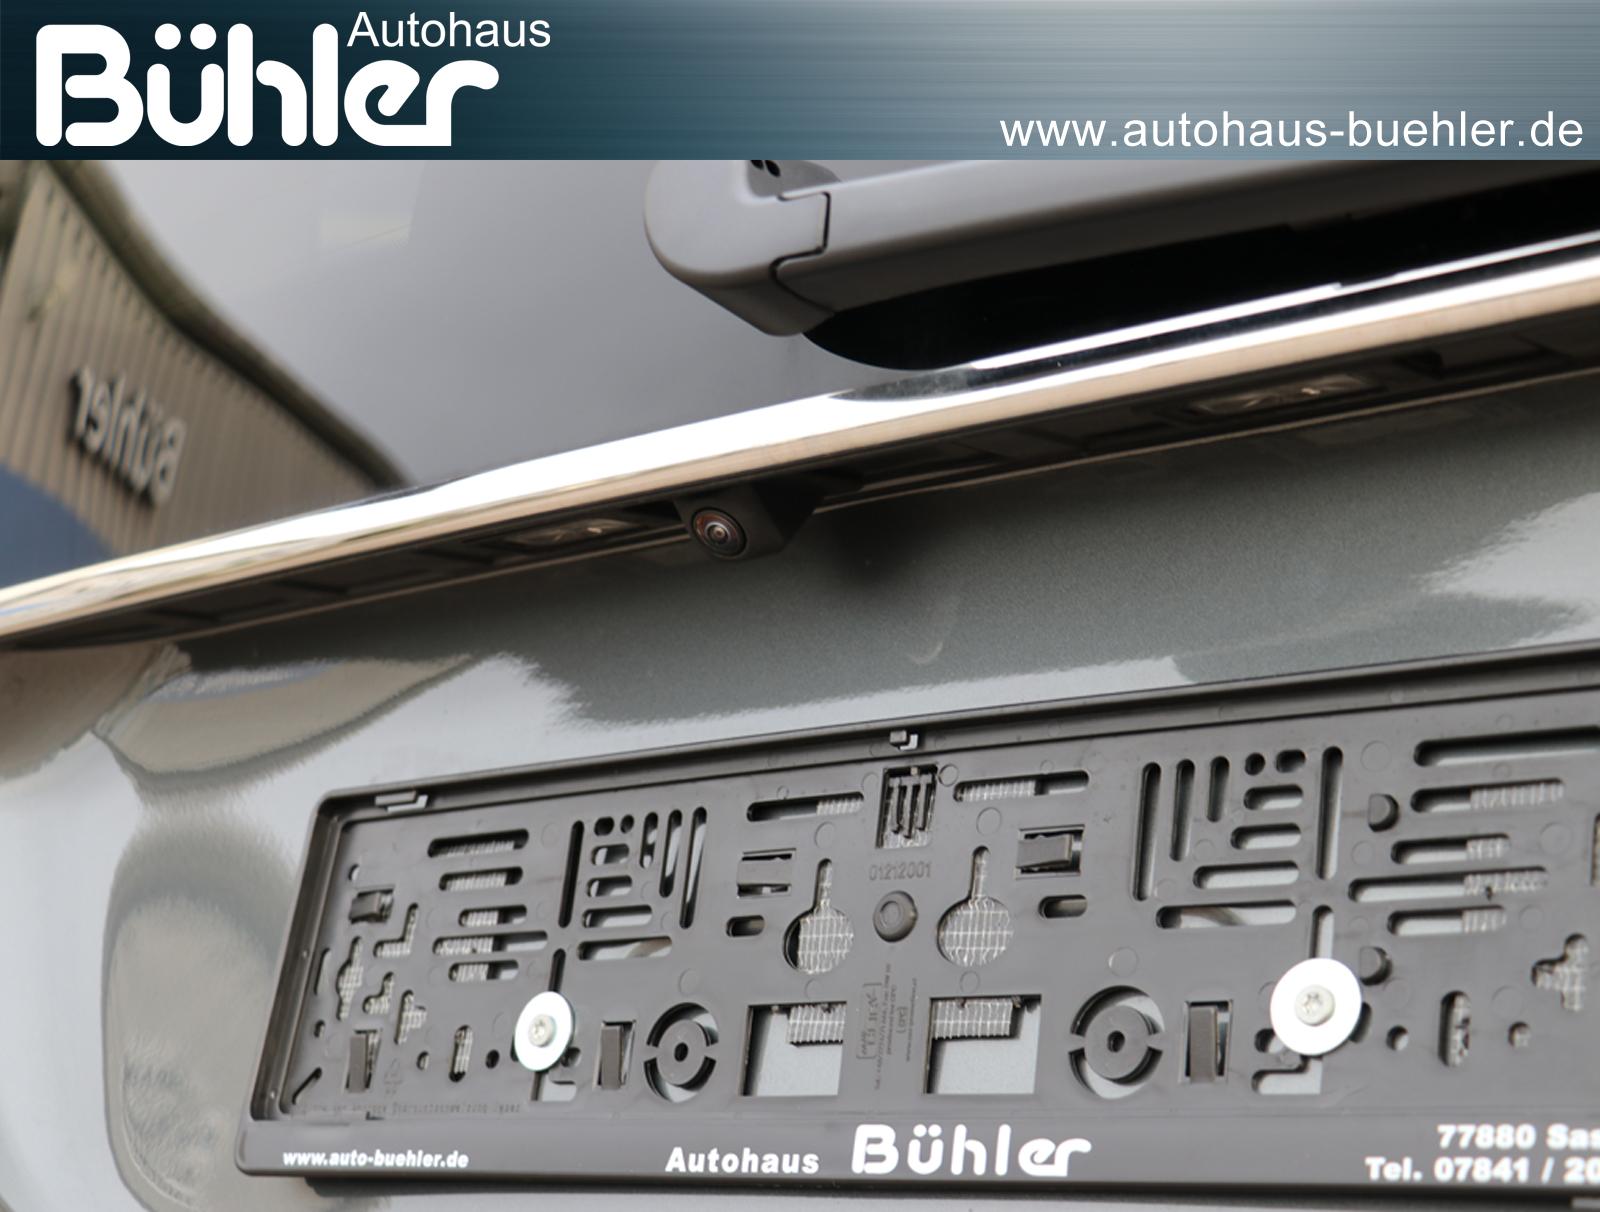 Ford Tourneo Connect 1.5 Titanium - Graphite Grey Metallic